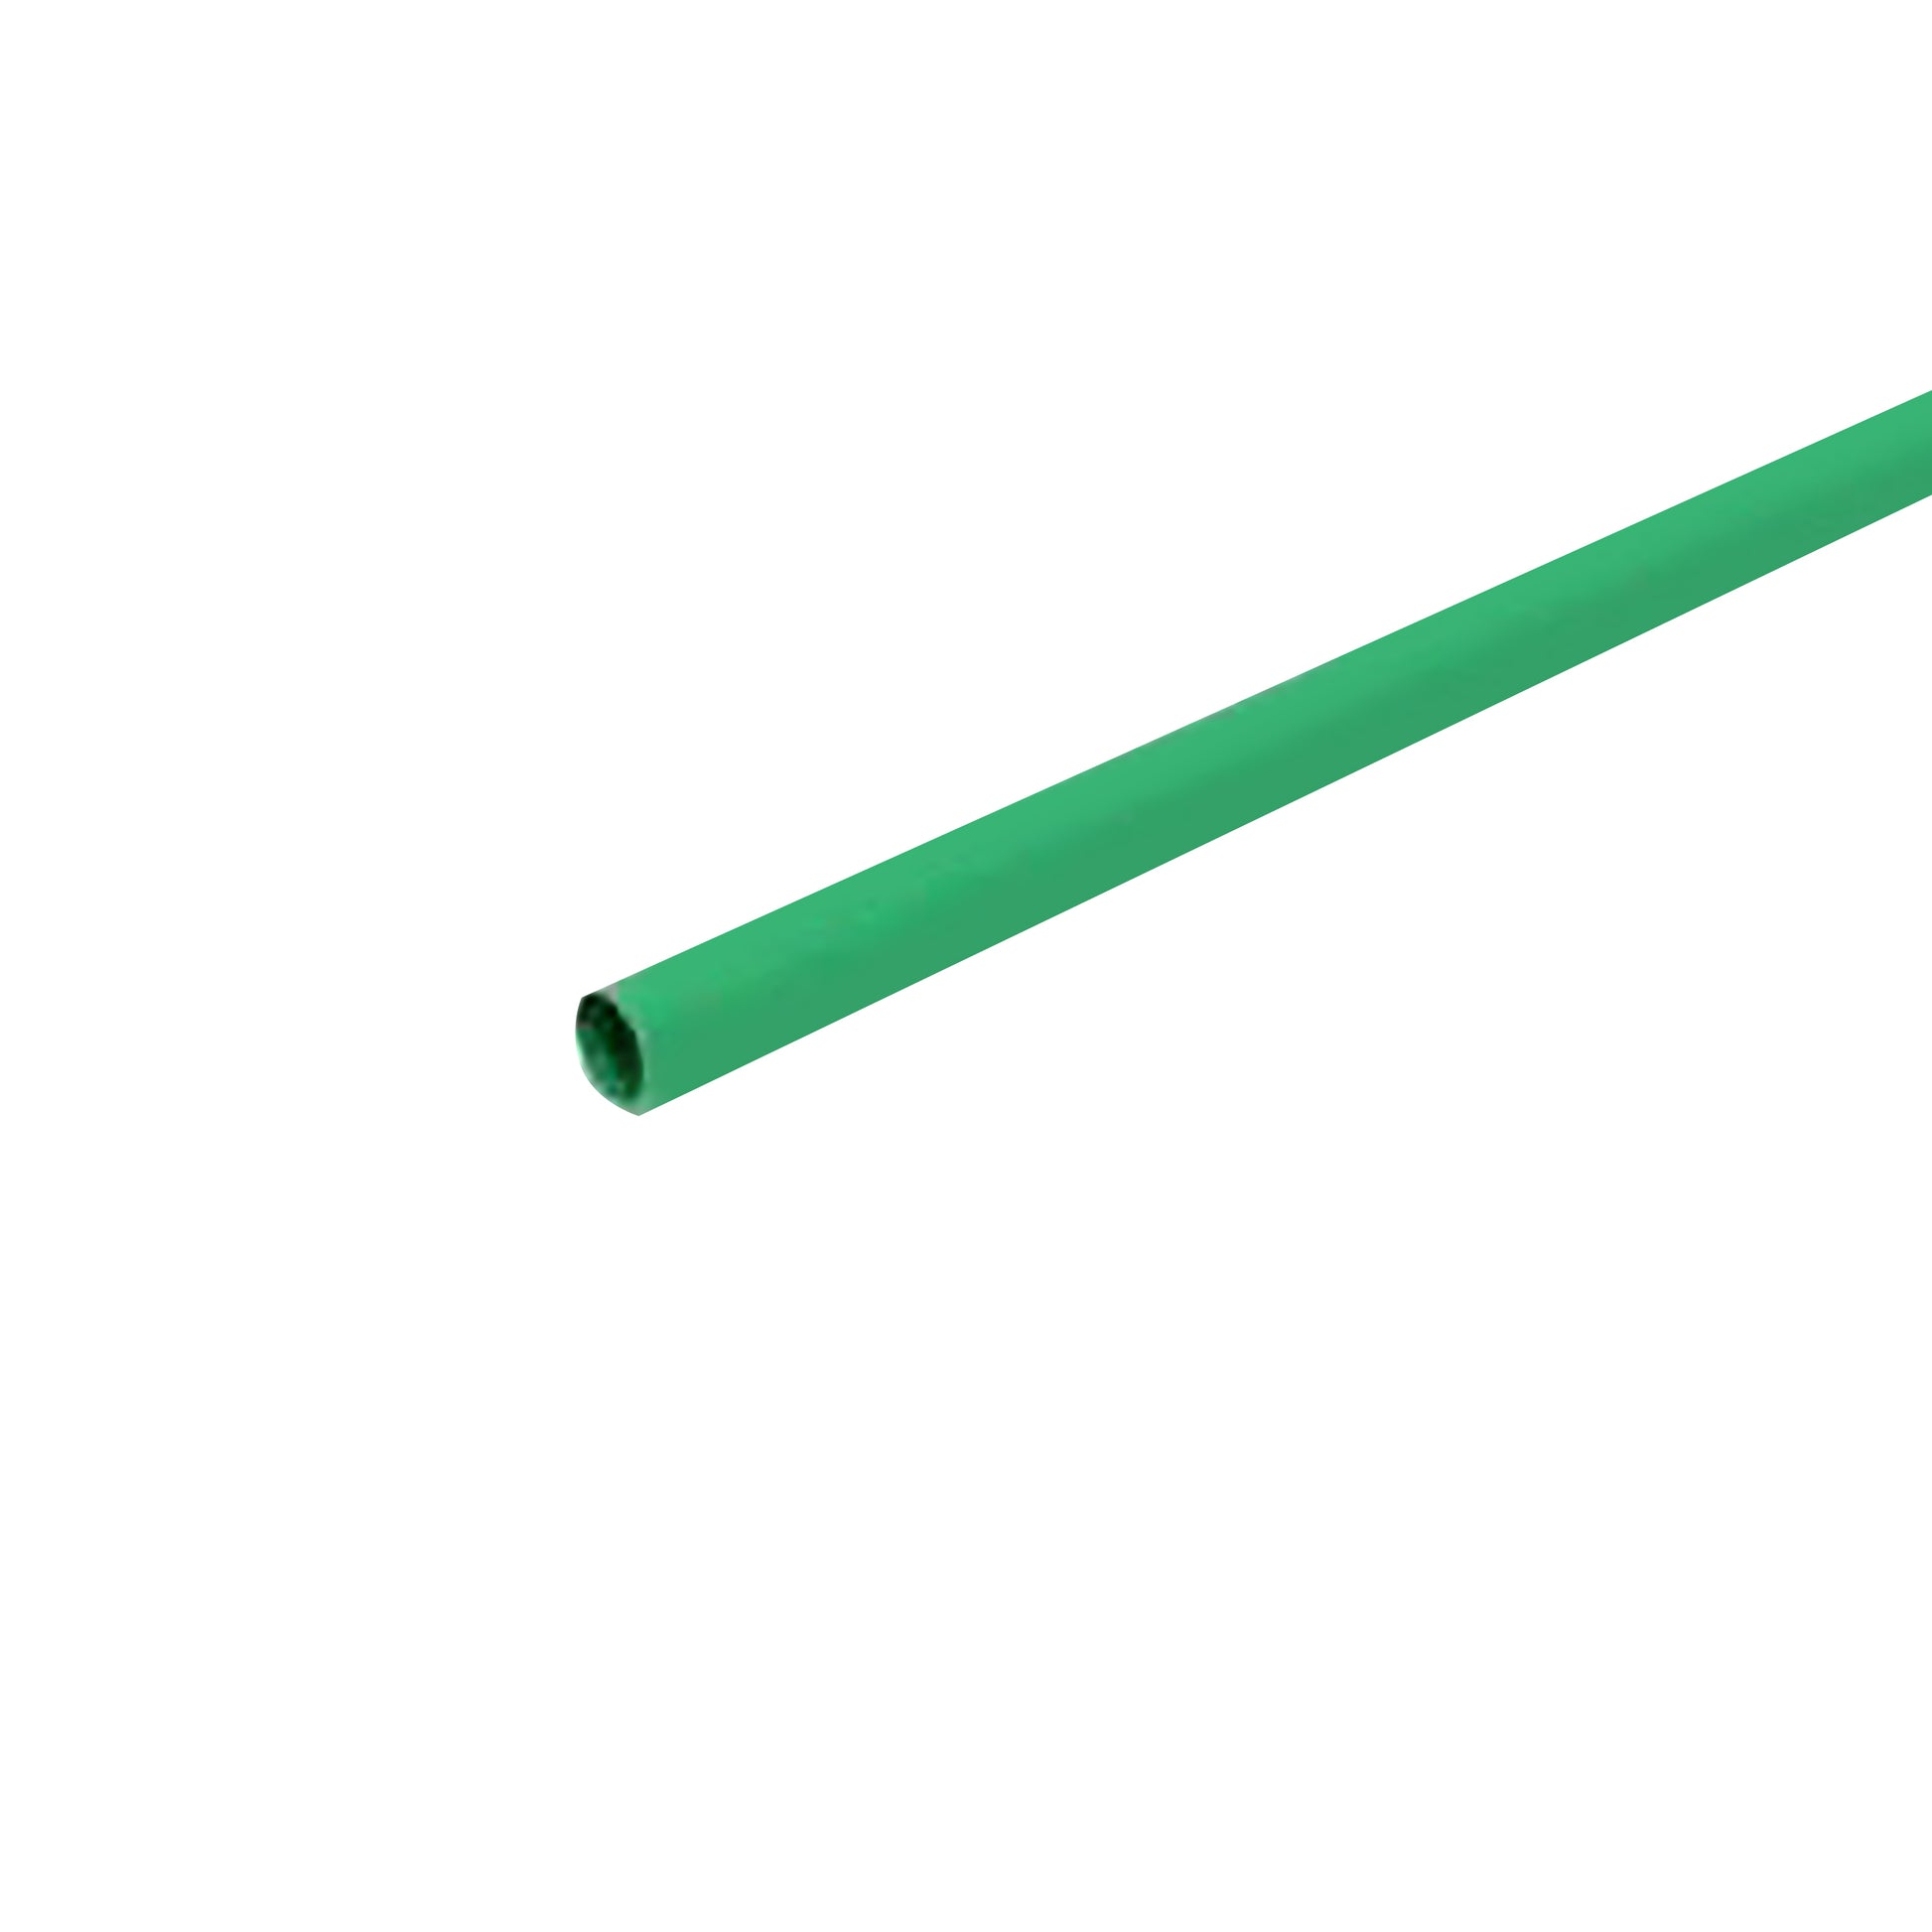 Flexible Thin Single Wall Non-Adhesive Heat Shrink Tubing 2:1 Green 1/2" ID - 25' Ft Spool